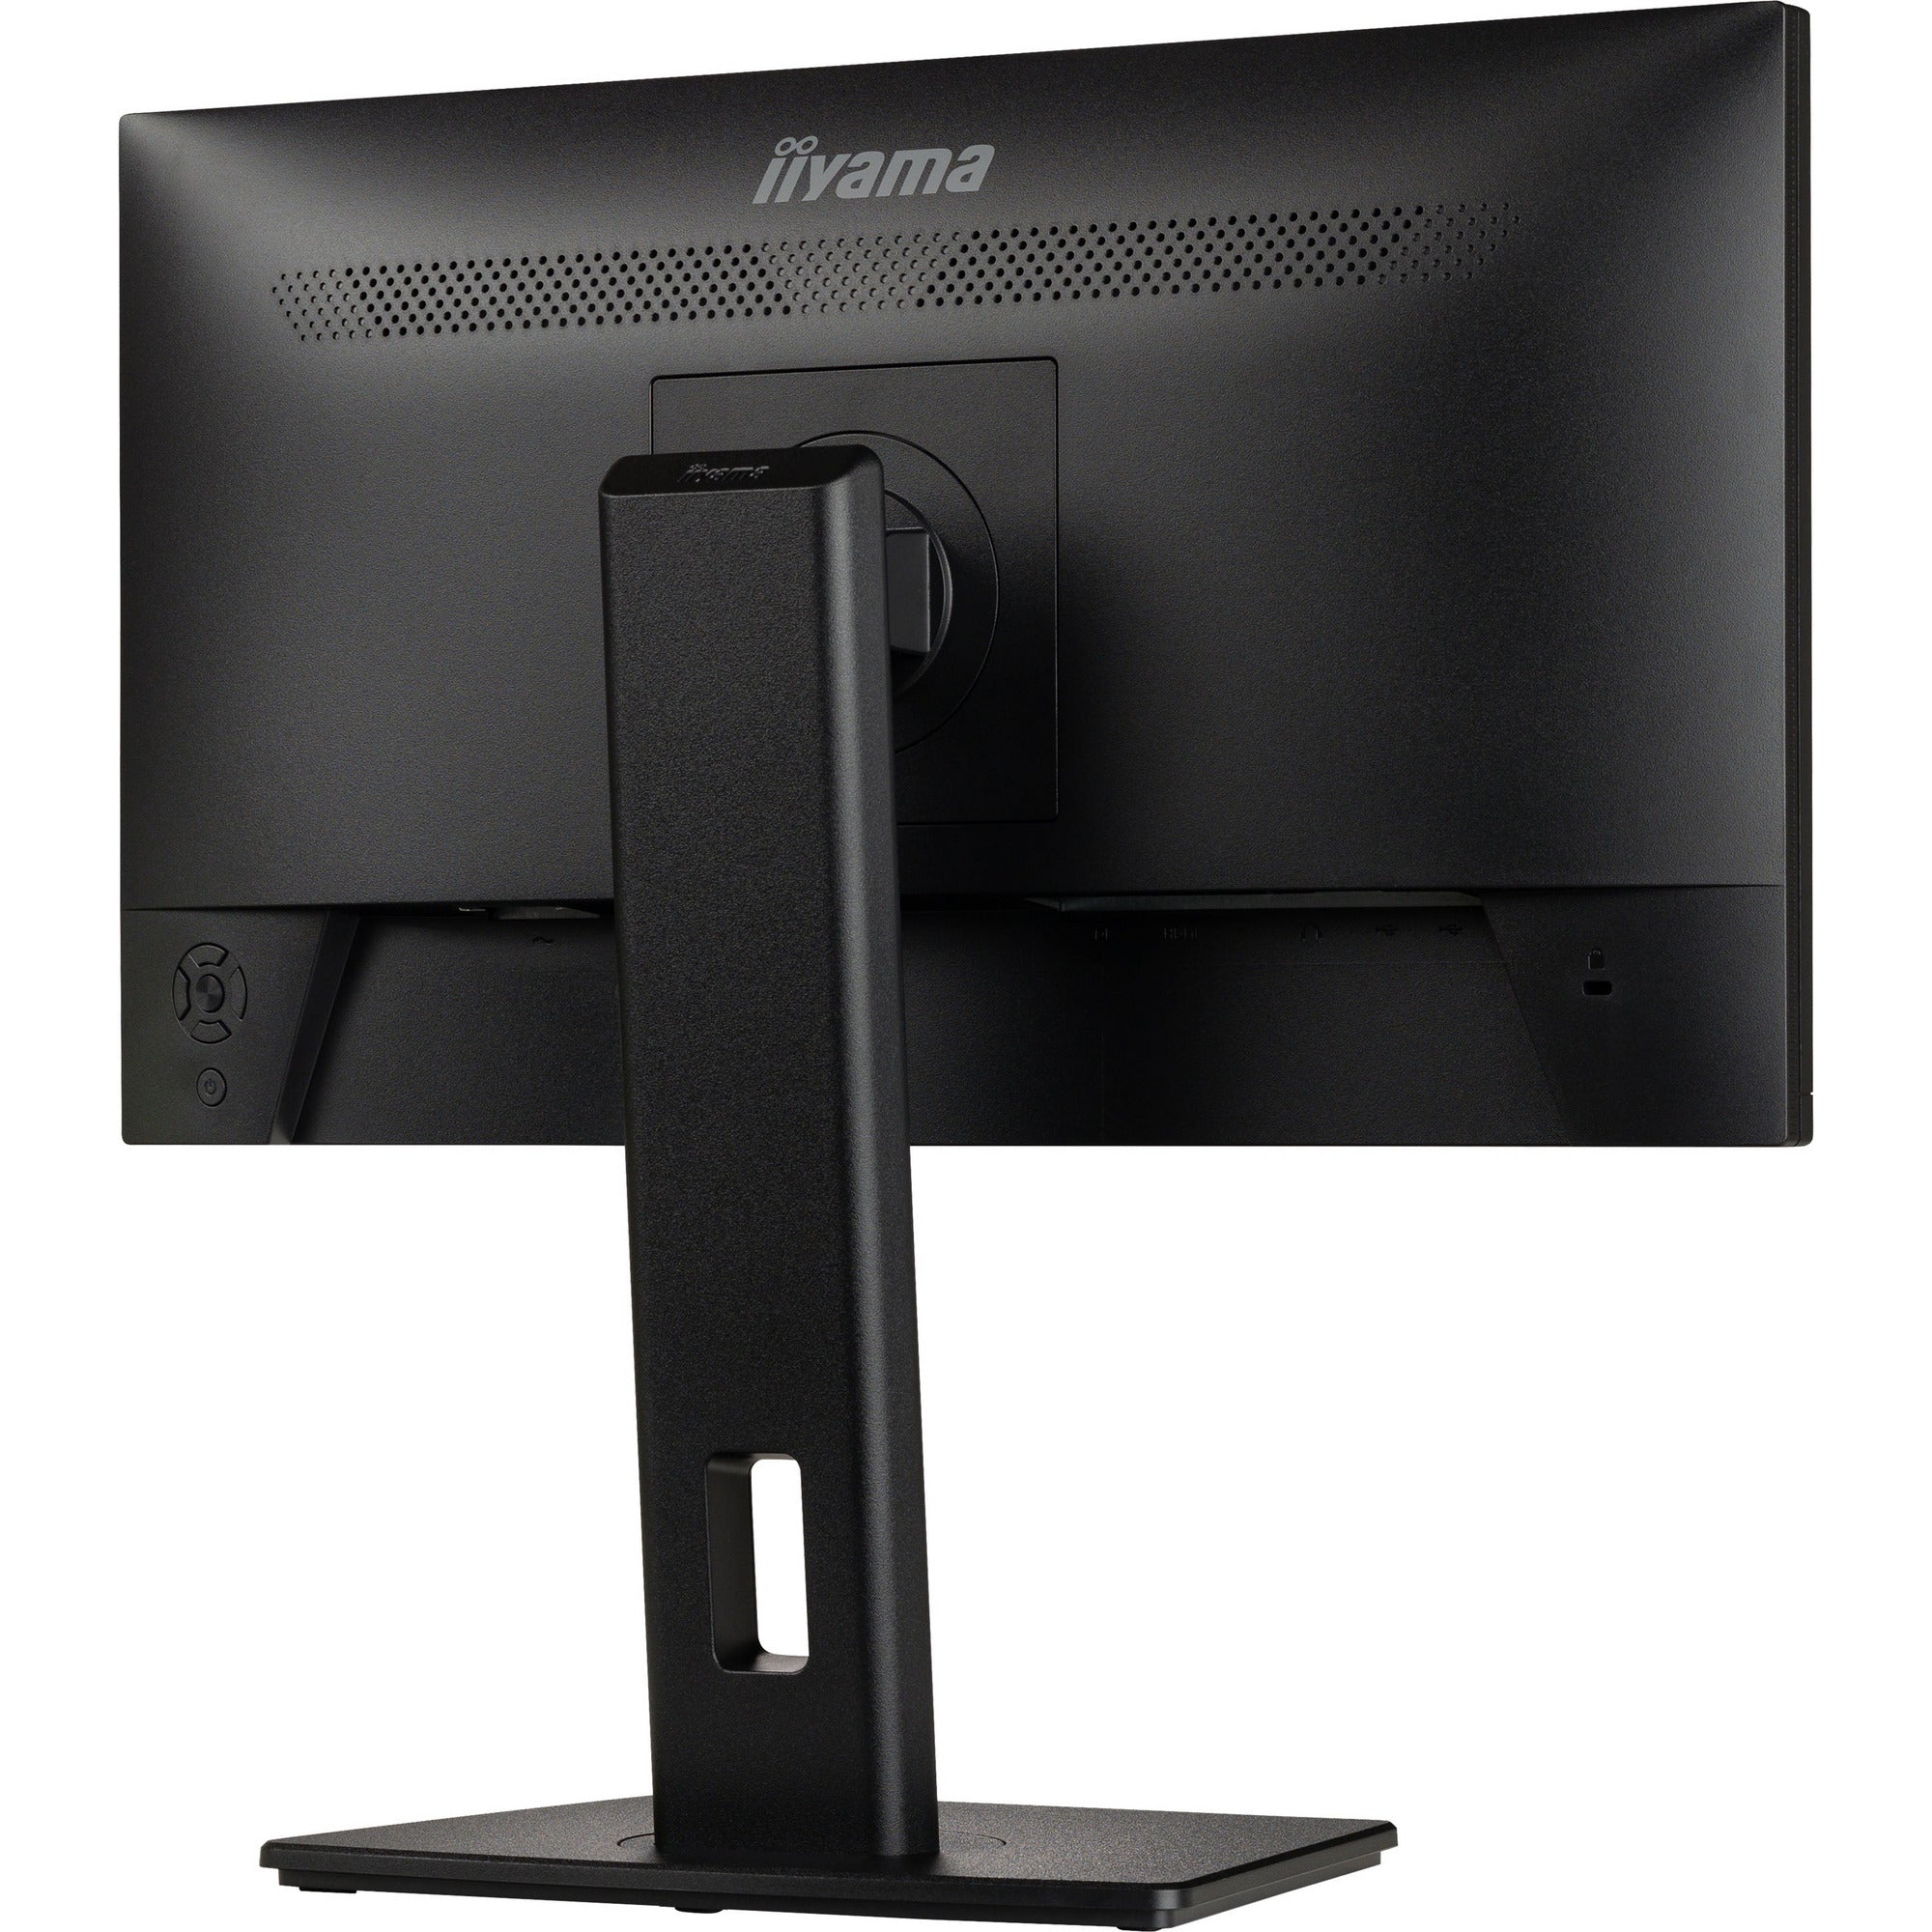 Iiyama ProLite XB2283HSU-B1 21.5” Full HD VA monitor with Height Adjust Stand